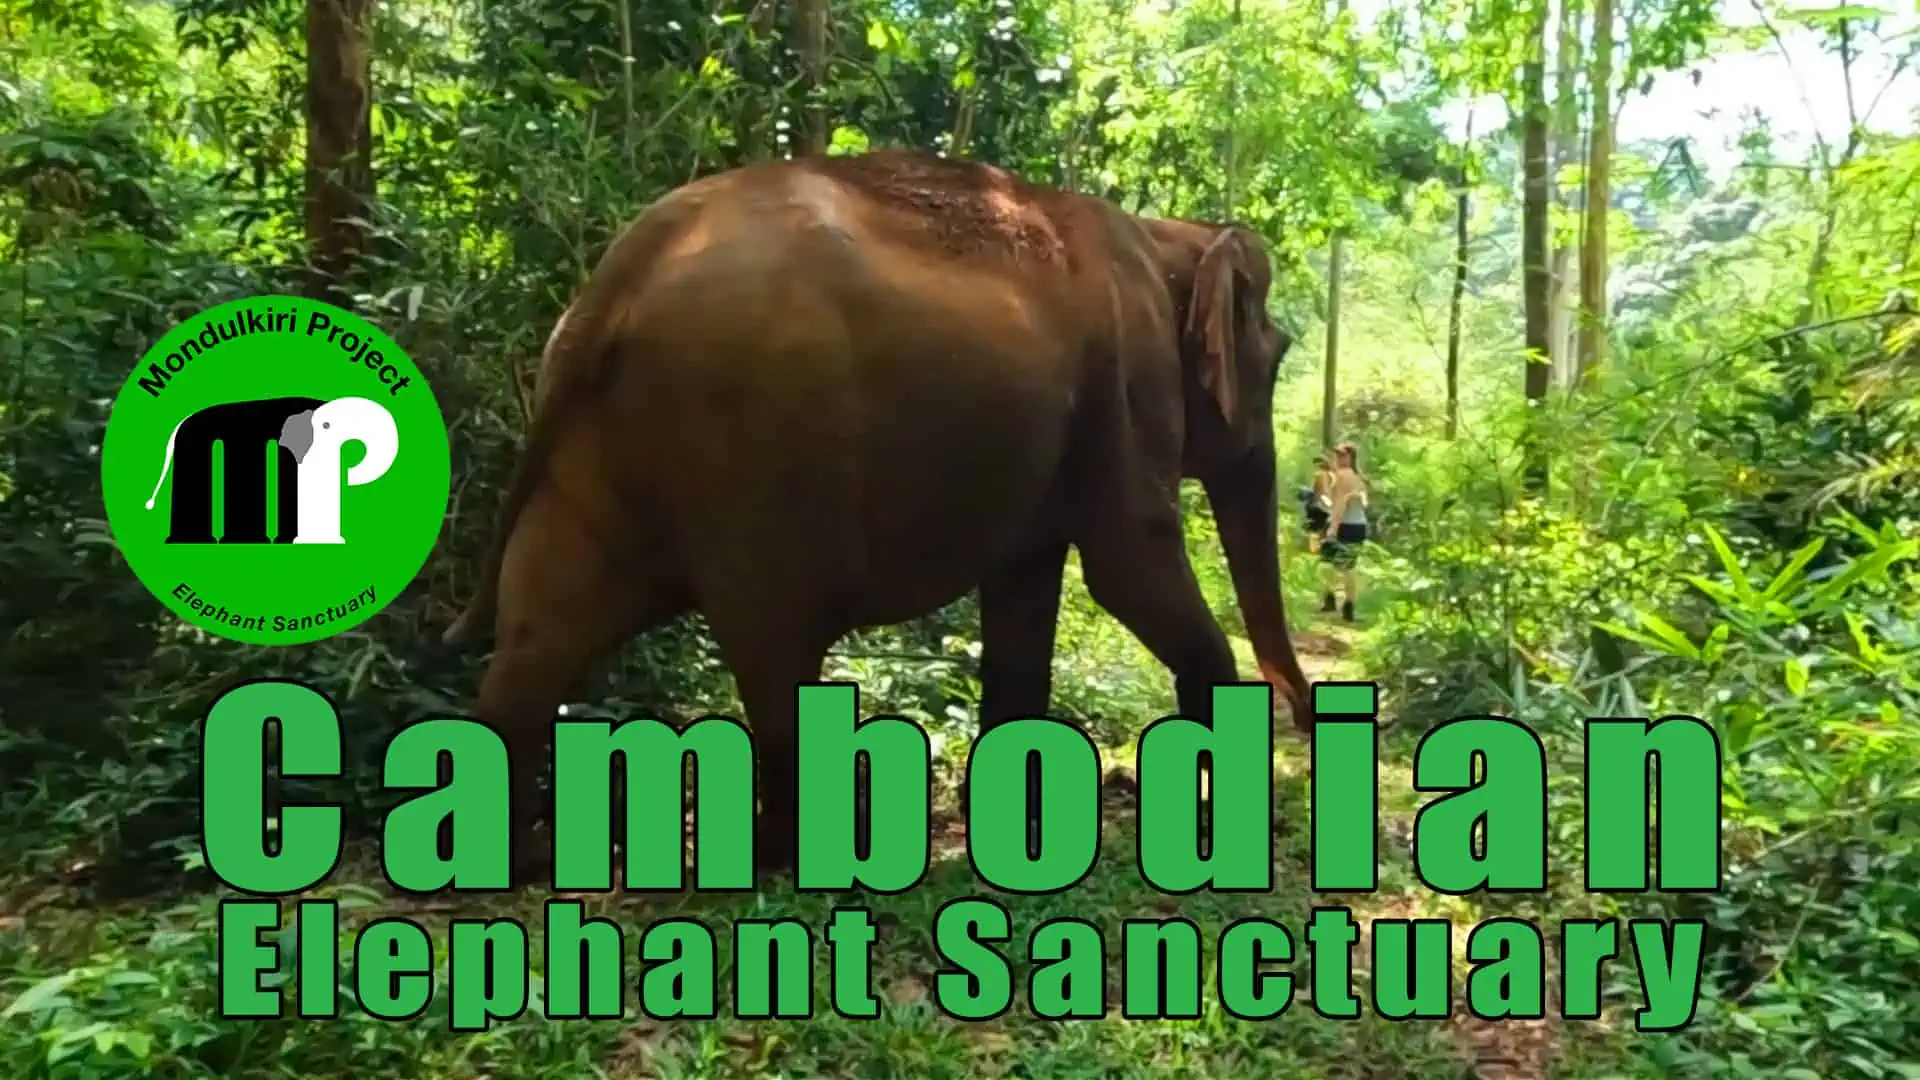 Cambodian Elephant Sanctuary